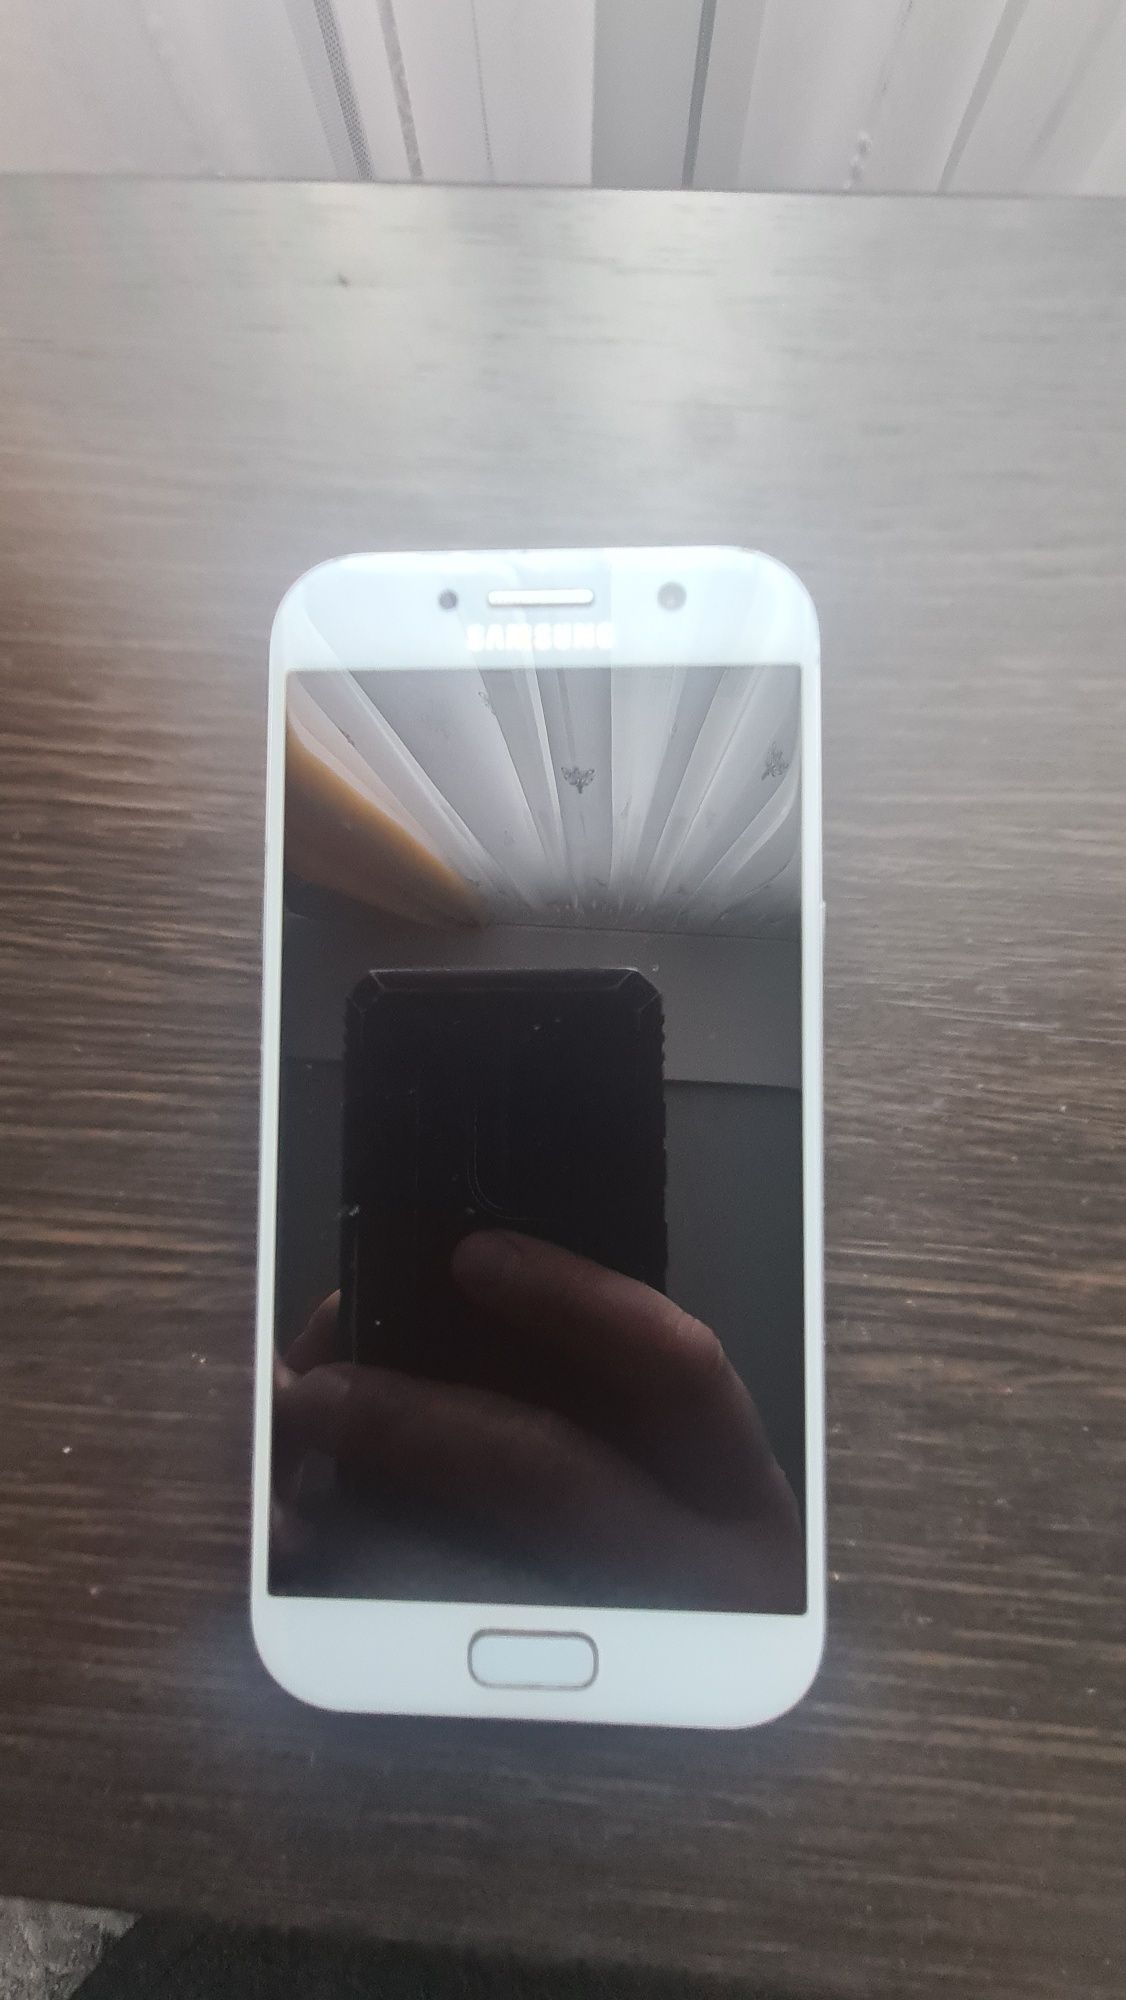 Samsung A 520 2017